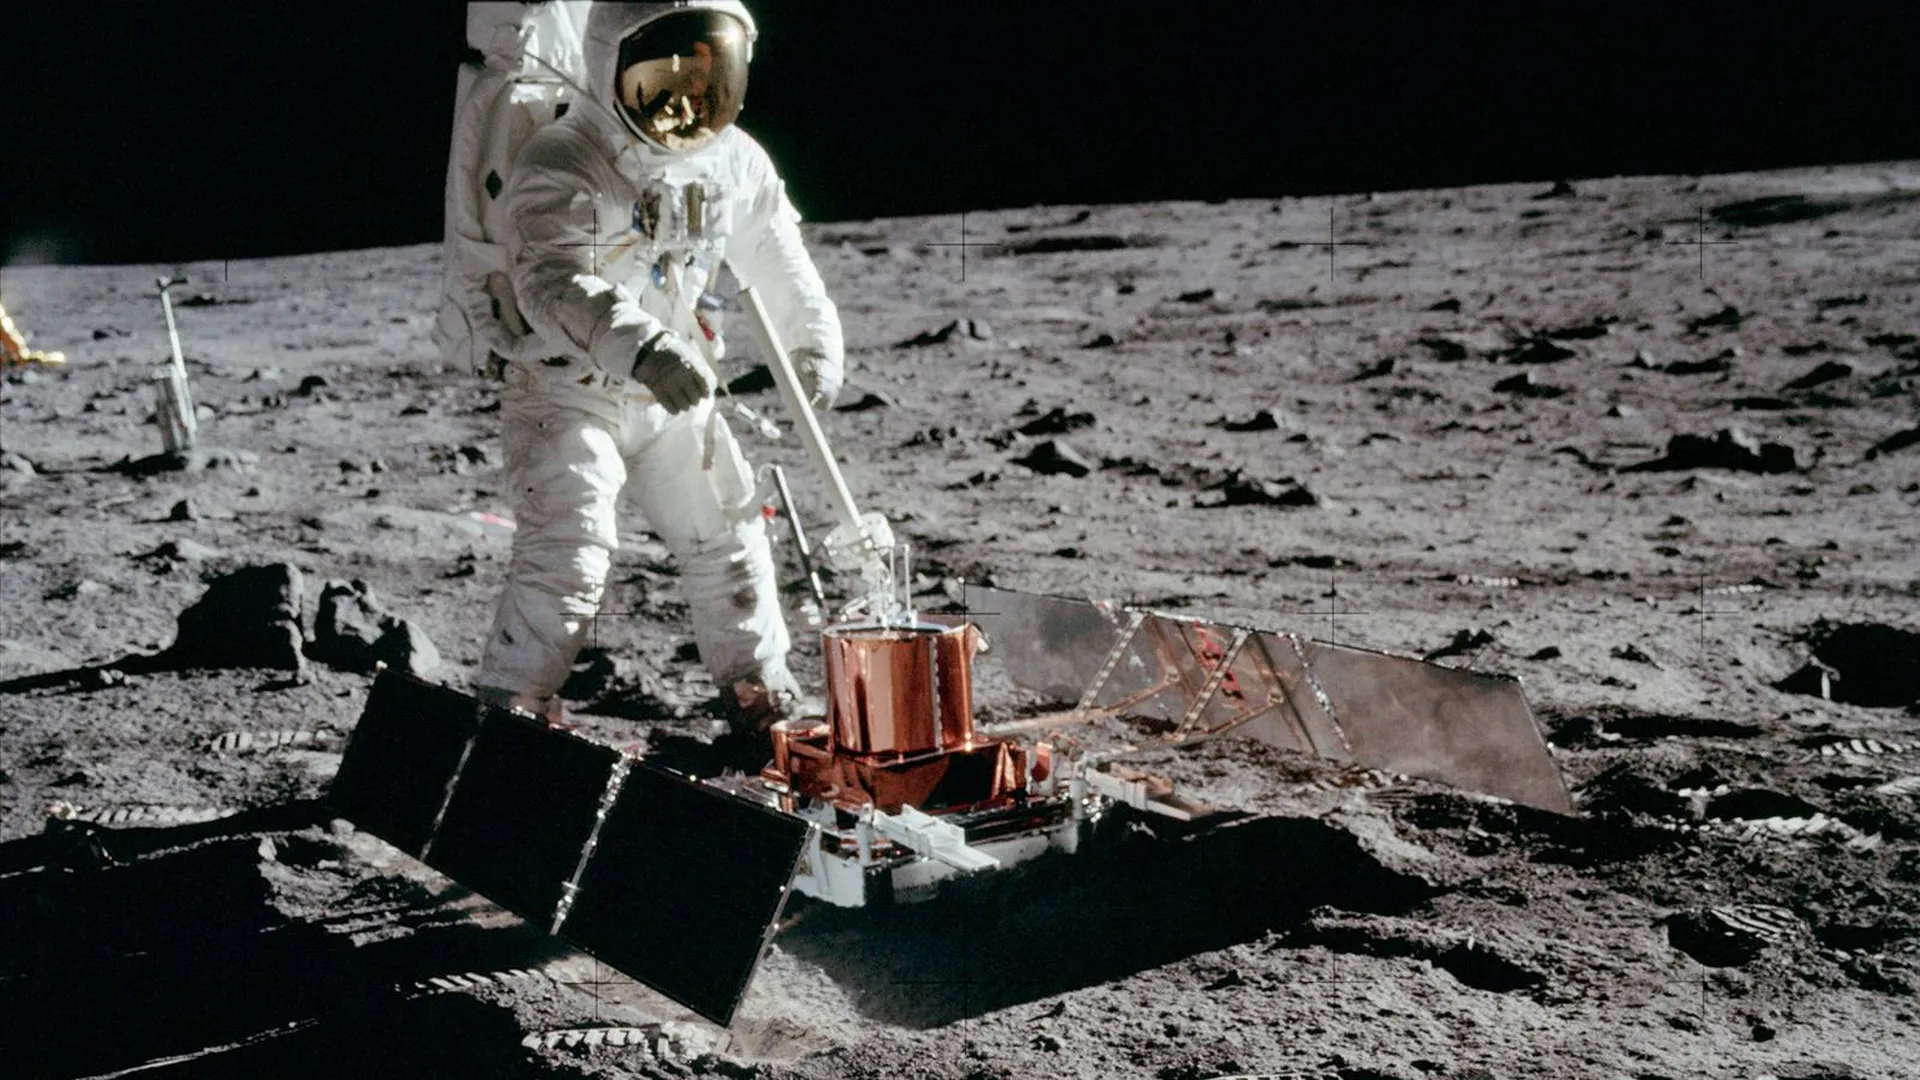 На луне есть деревья. Аполлон 11. Апполо 11 на Луне. Миссия Аполлон на луну.